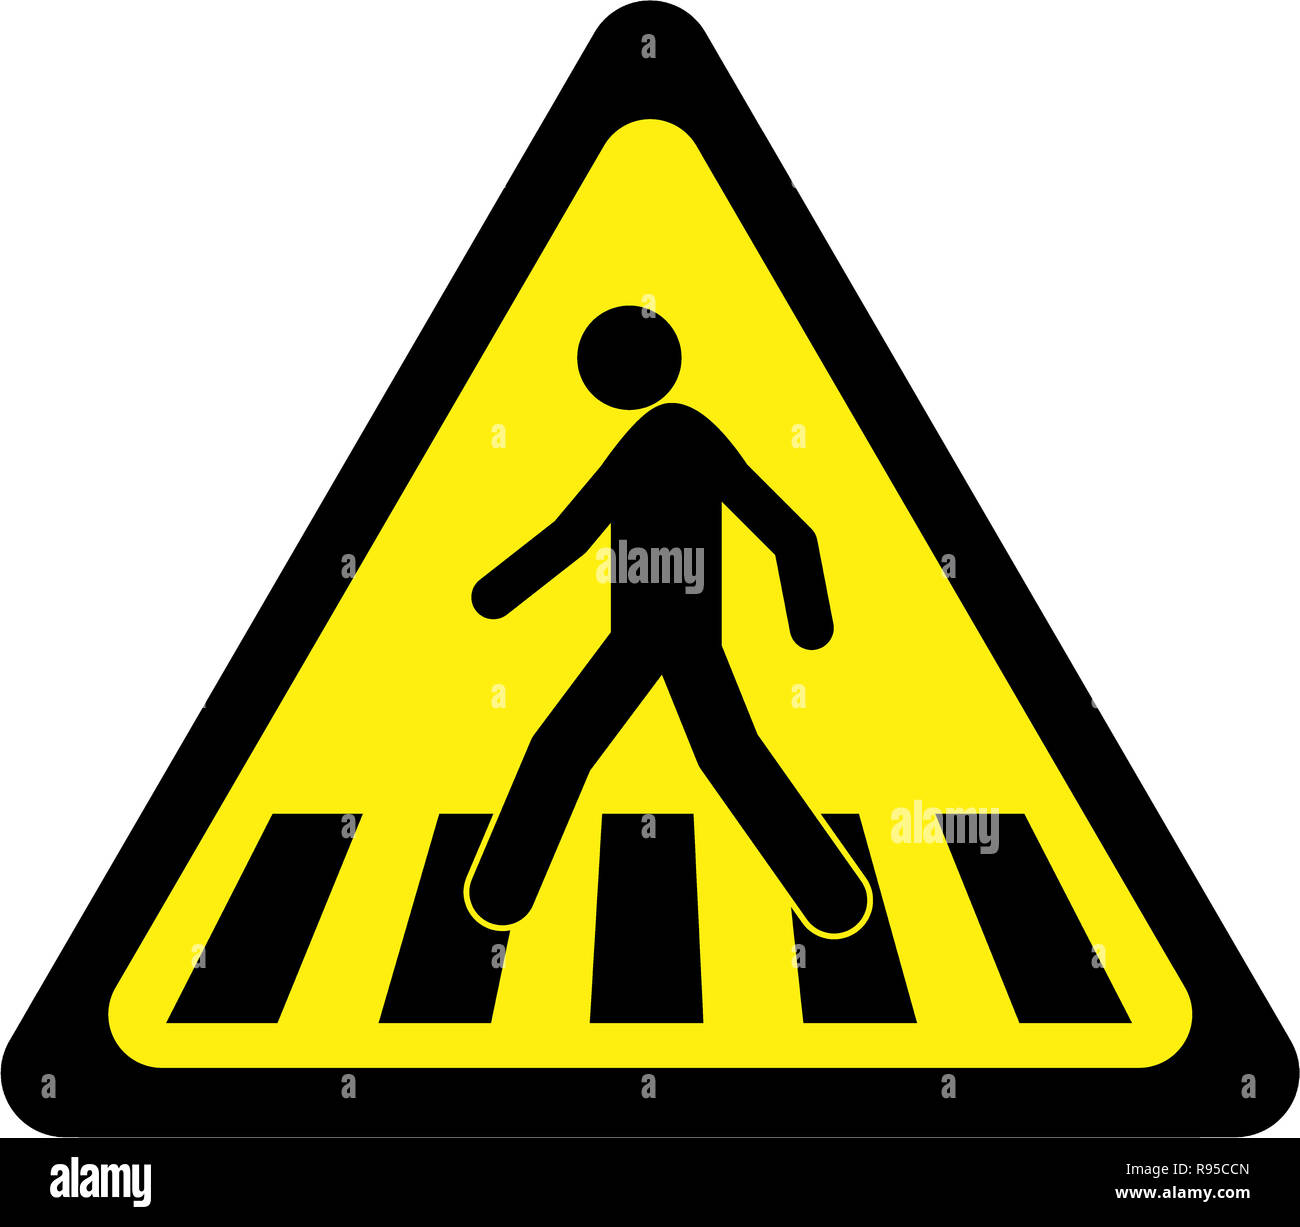 Warning sign with crosswalk symbol Stock Photo